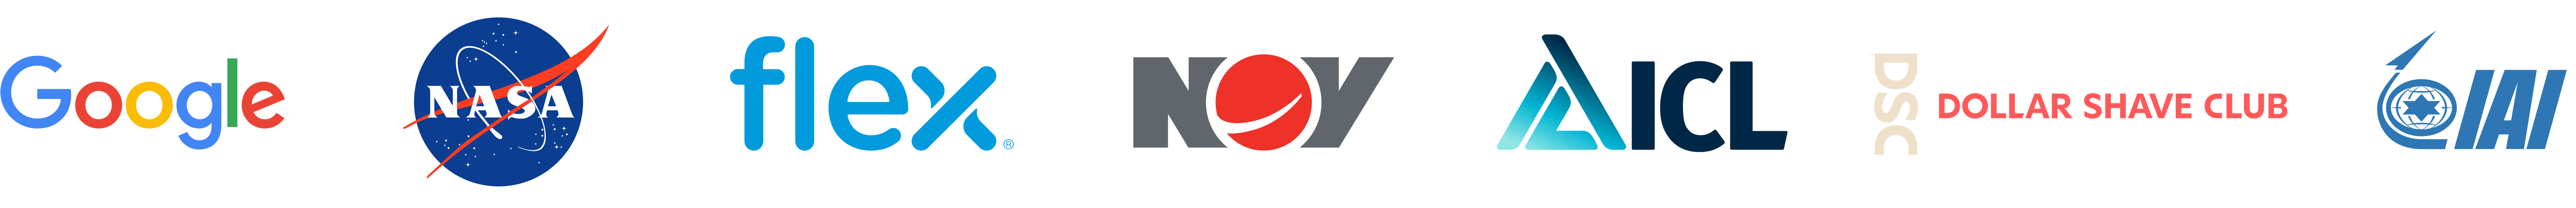 A black background displaying logos of various companies, including Google, NASA, Flex, NOV, Avid, PSD, Dollar Shave Club, and GE.